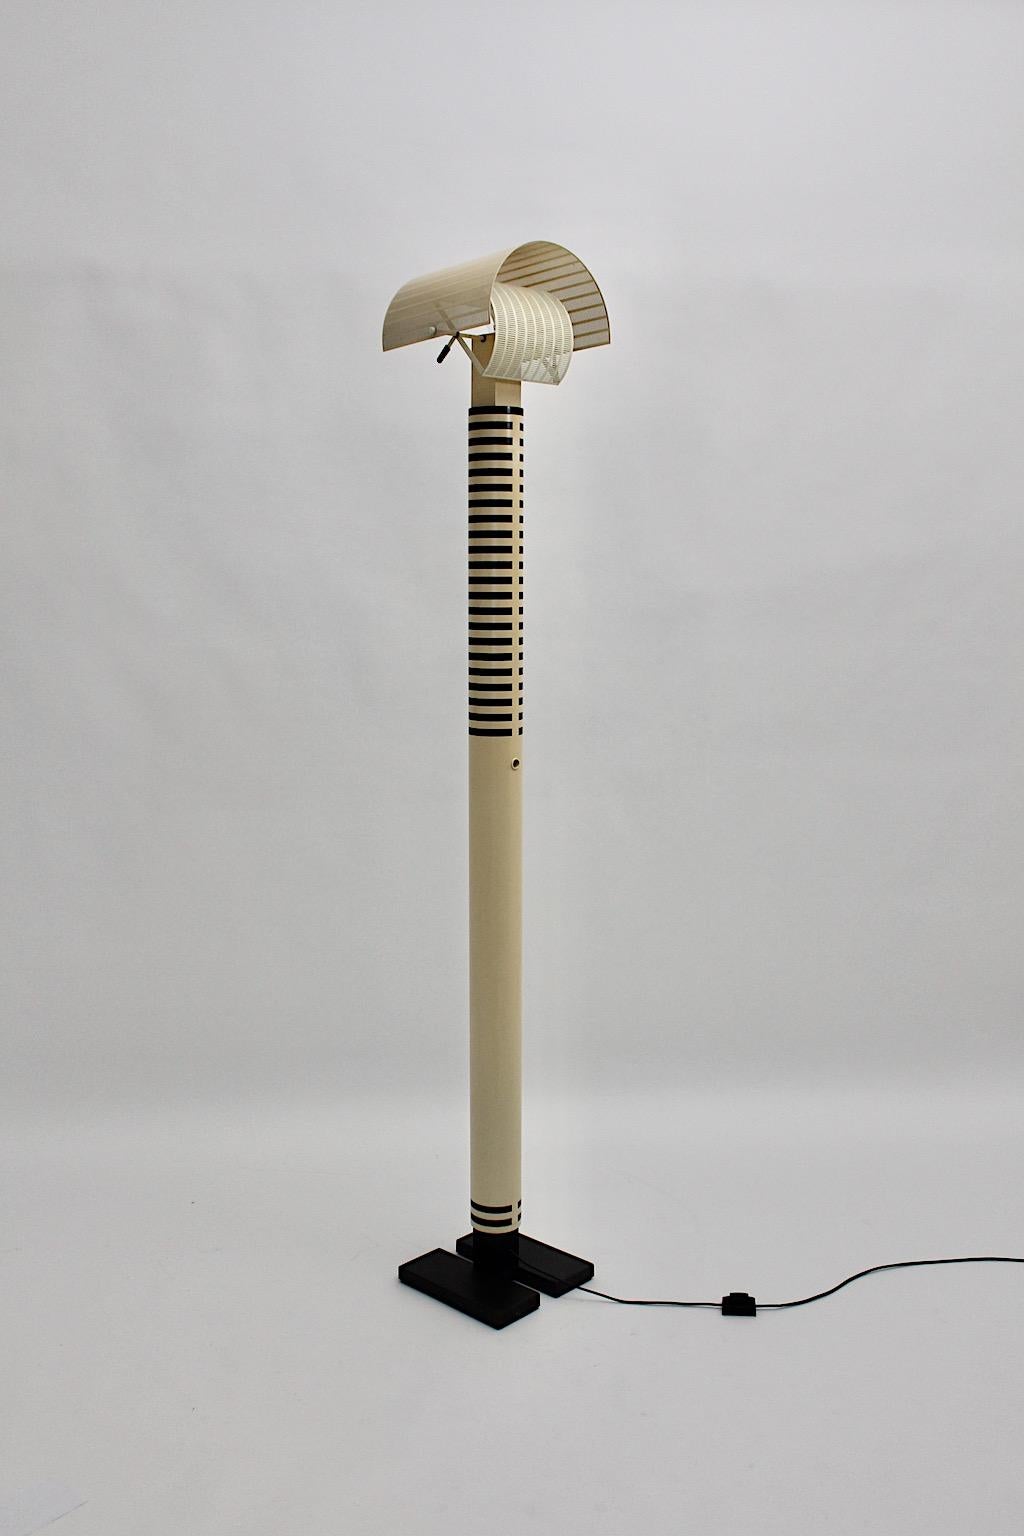 Modern Mario Botta Vintage Black and Ivory Floor Lamp Shogun Terra 1980s Italy For Sale